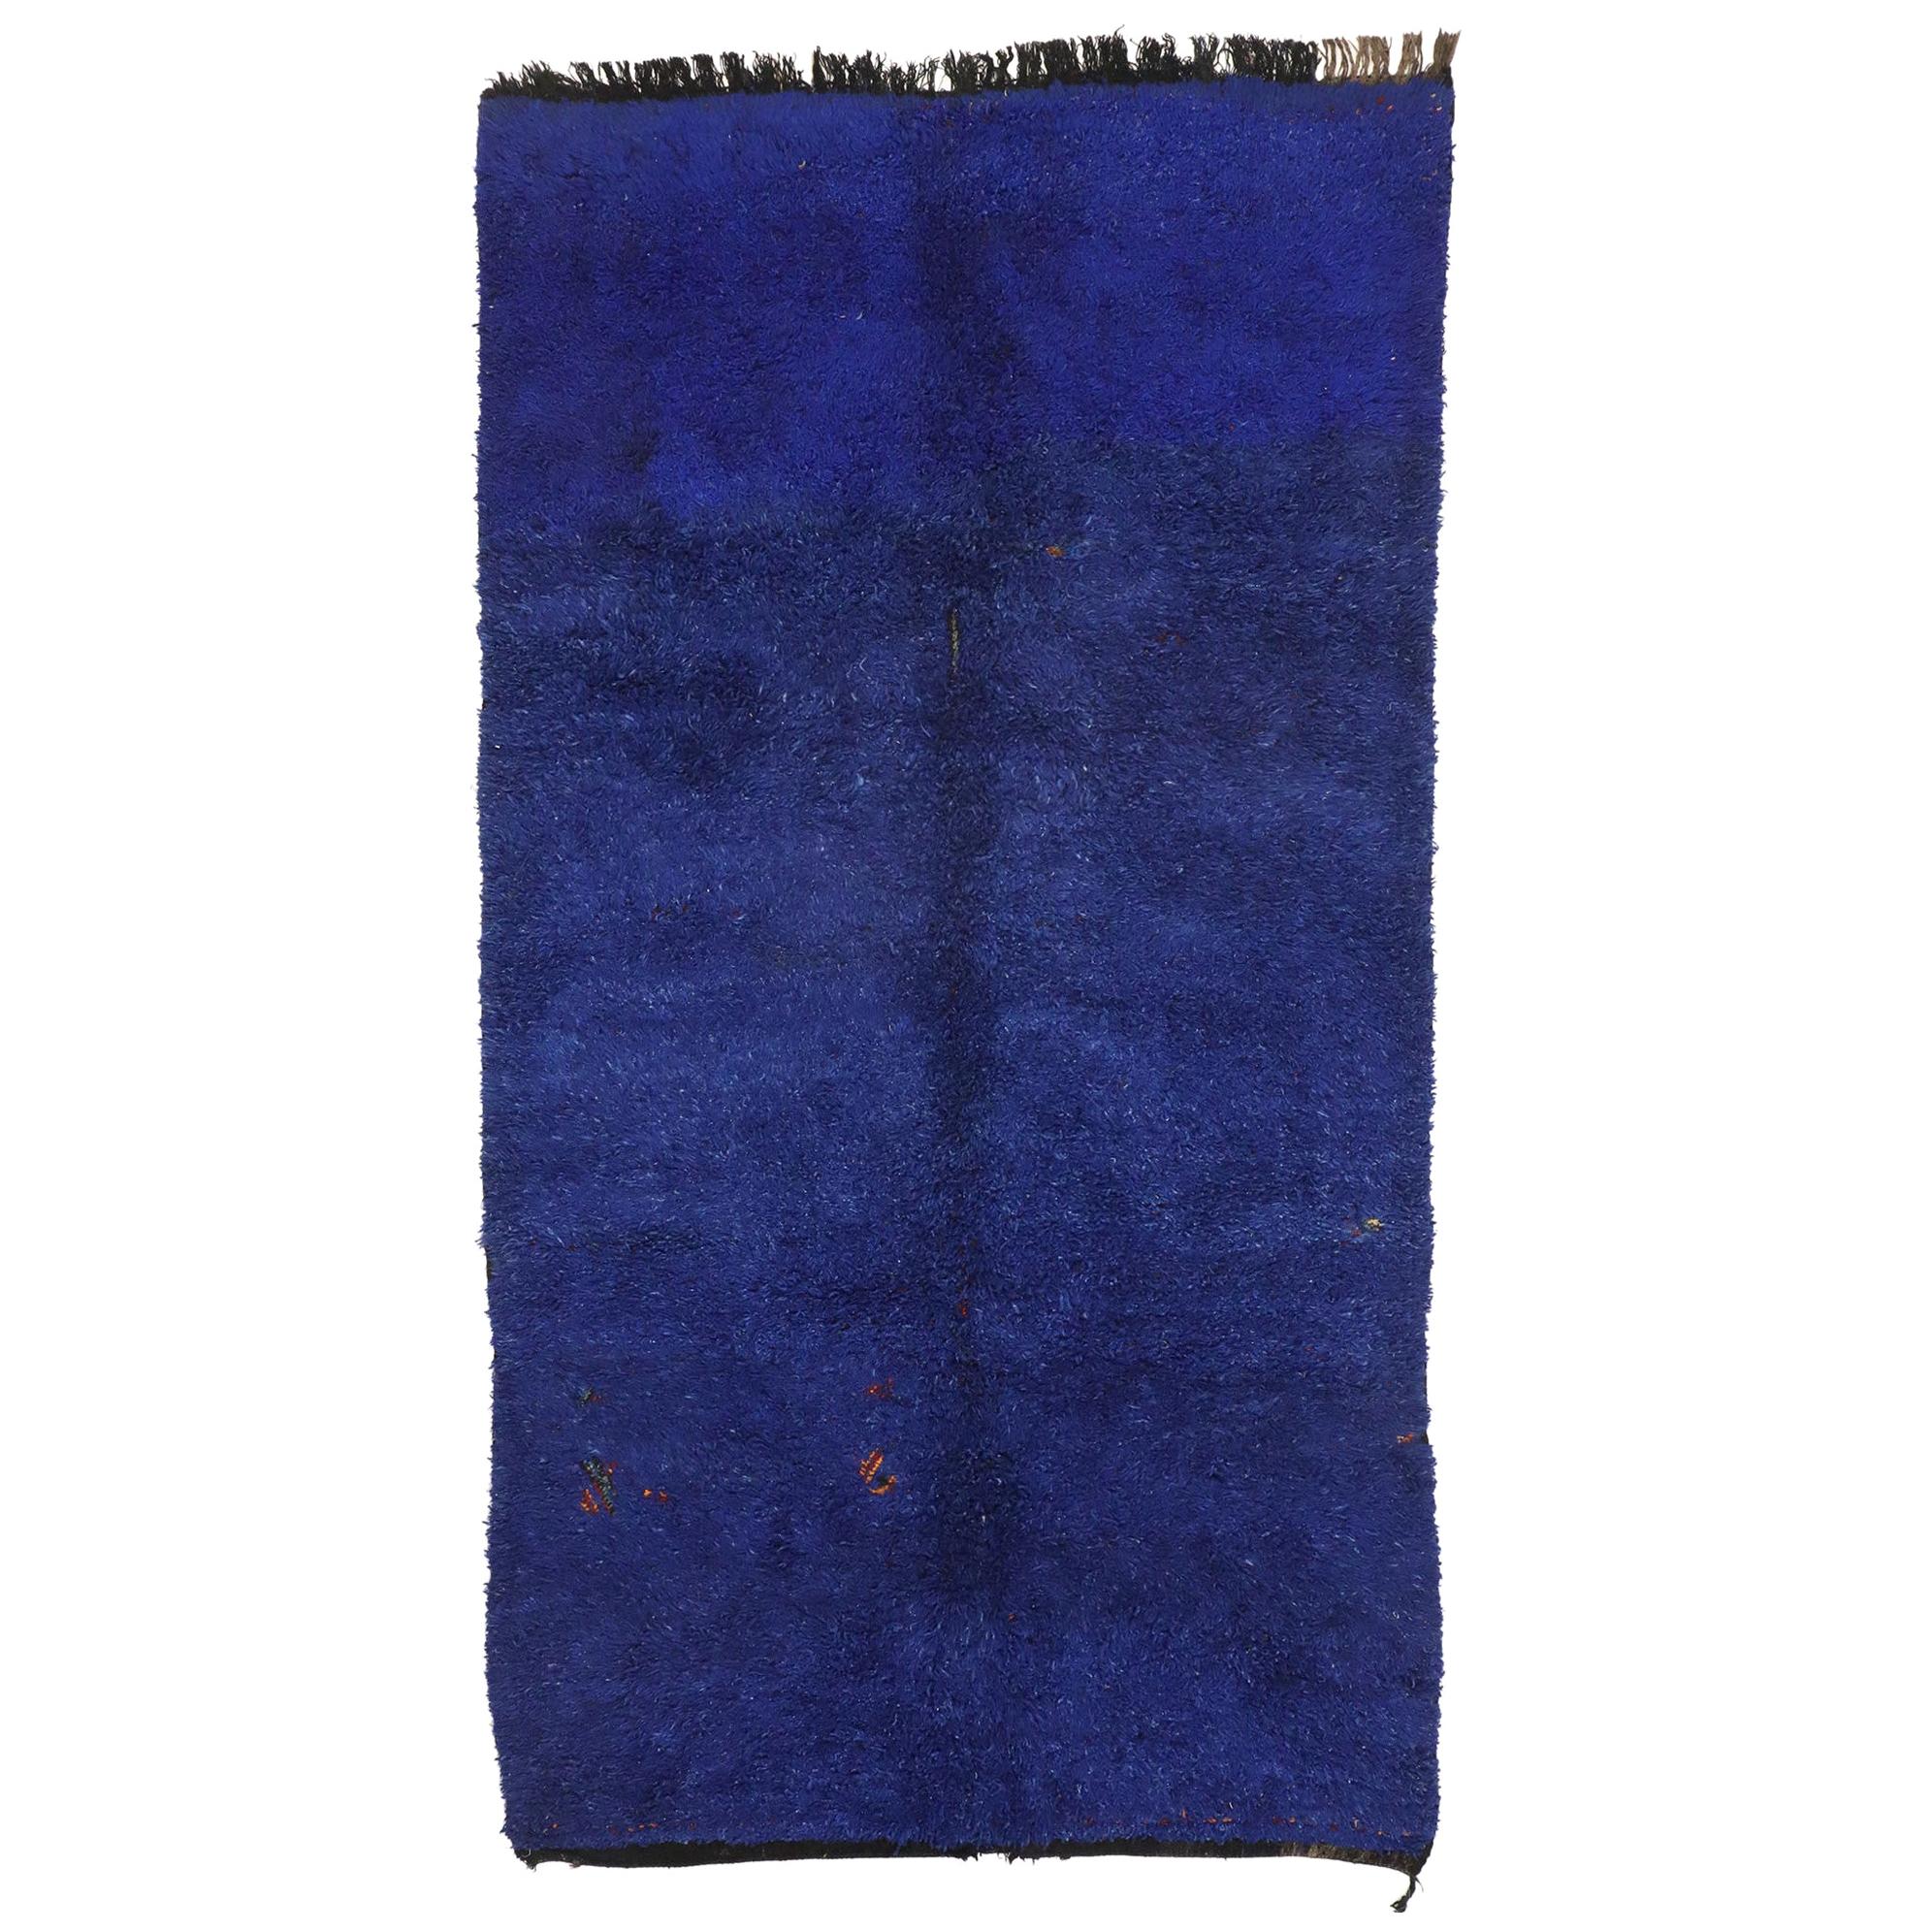 Marokkanischer blauer Beni MGuild-Teppich im Vintage-Stil, Bohemian Paradise Meets Cozy Nomad